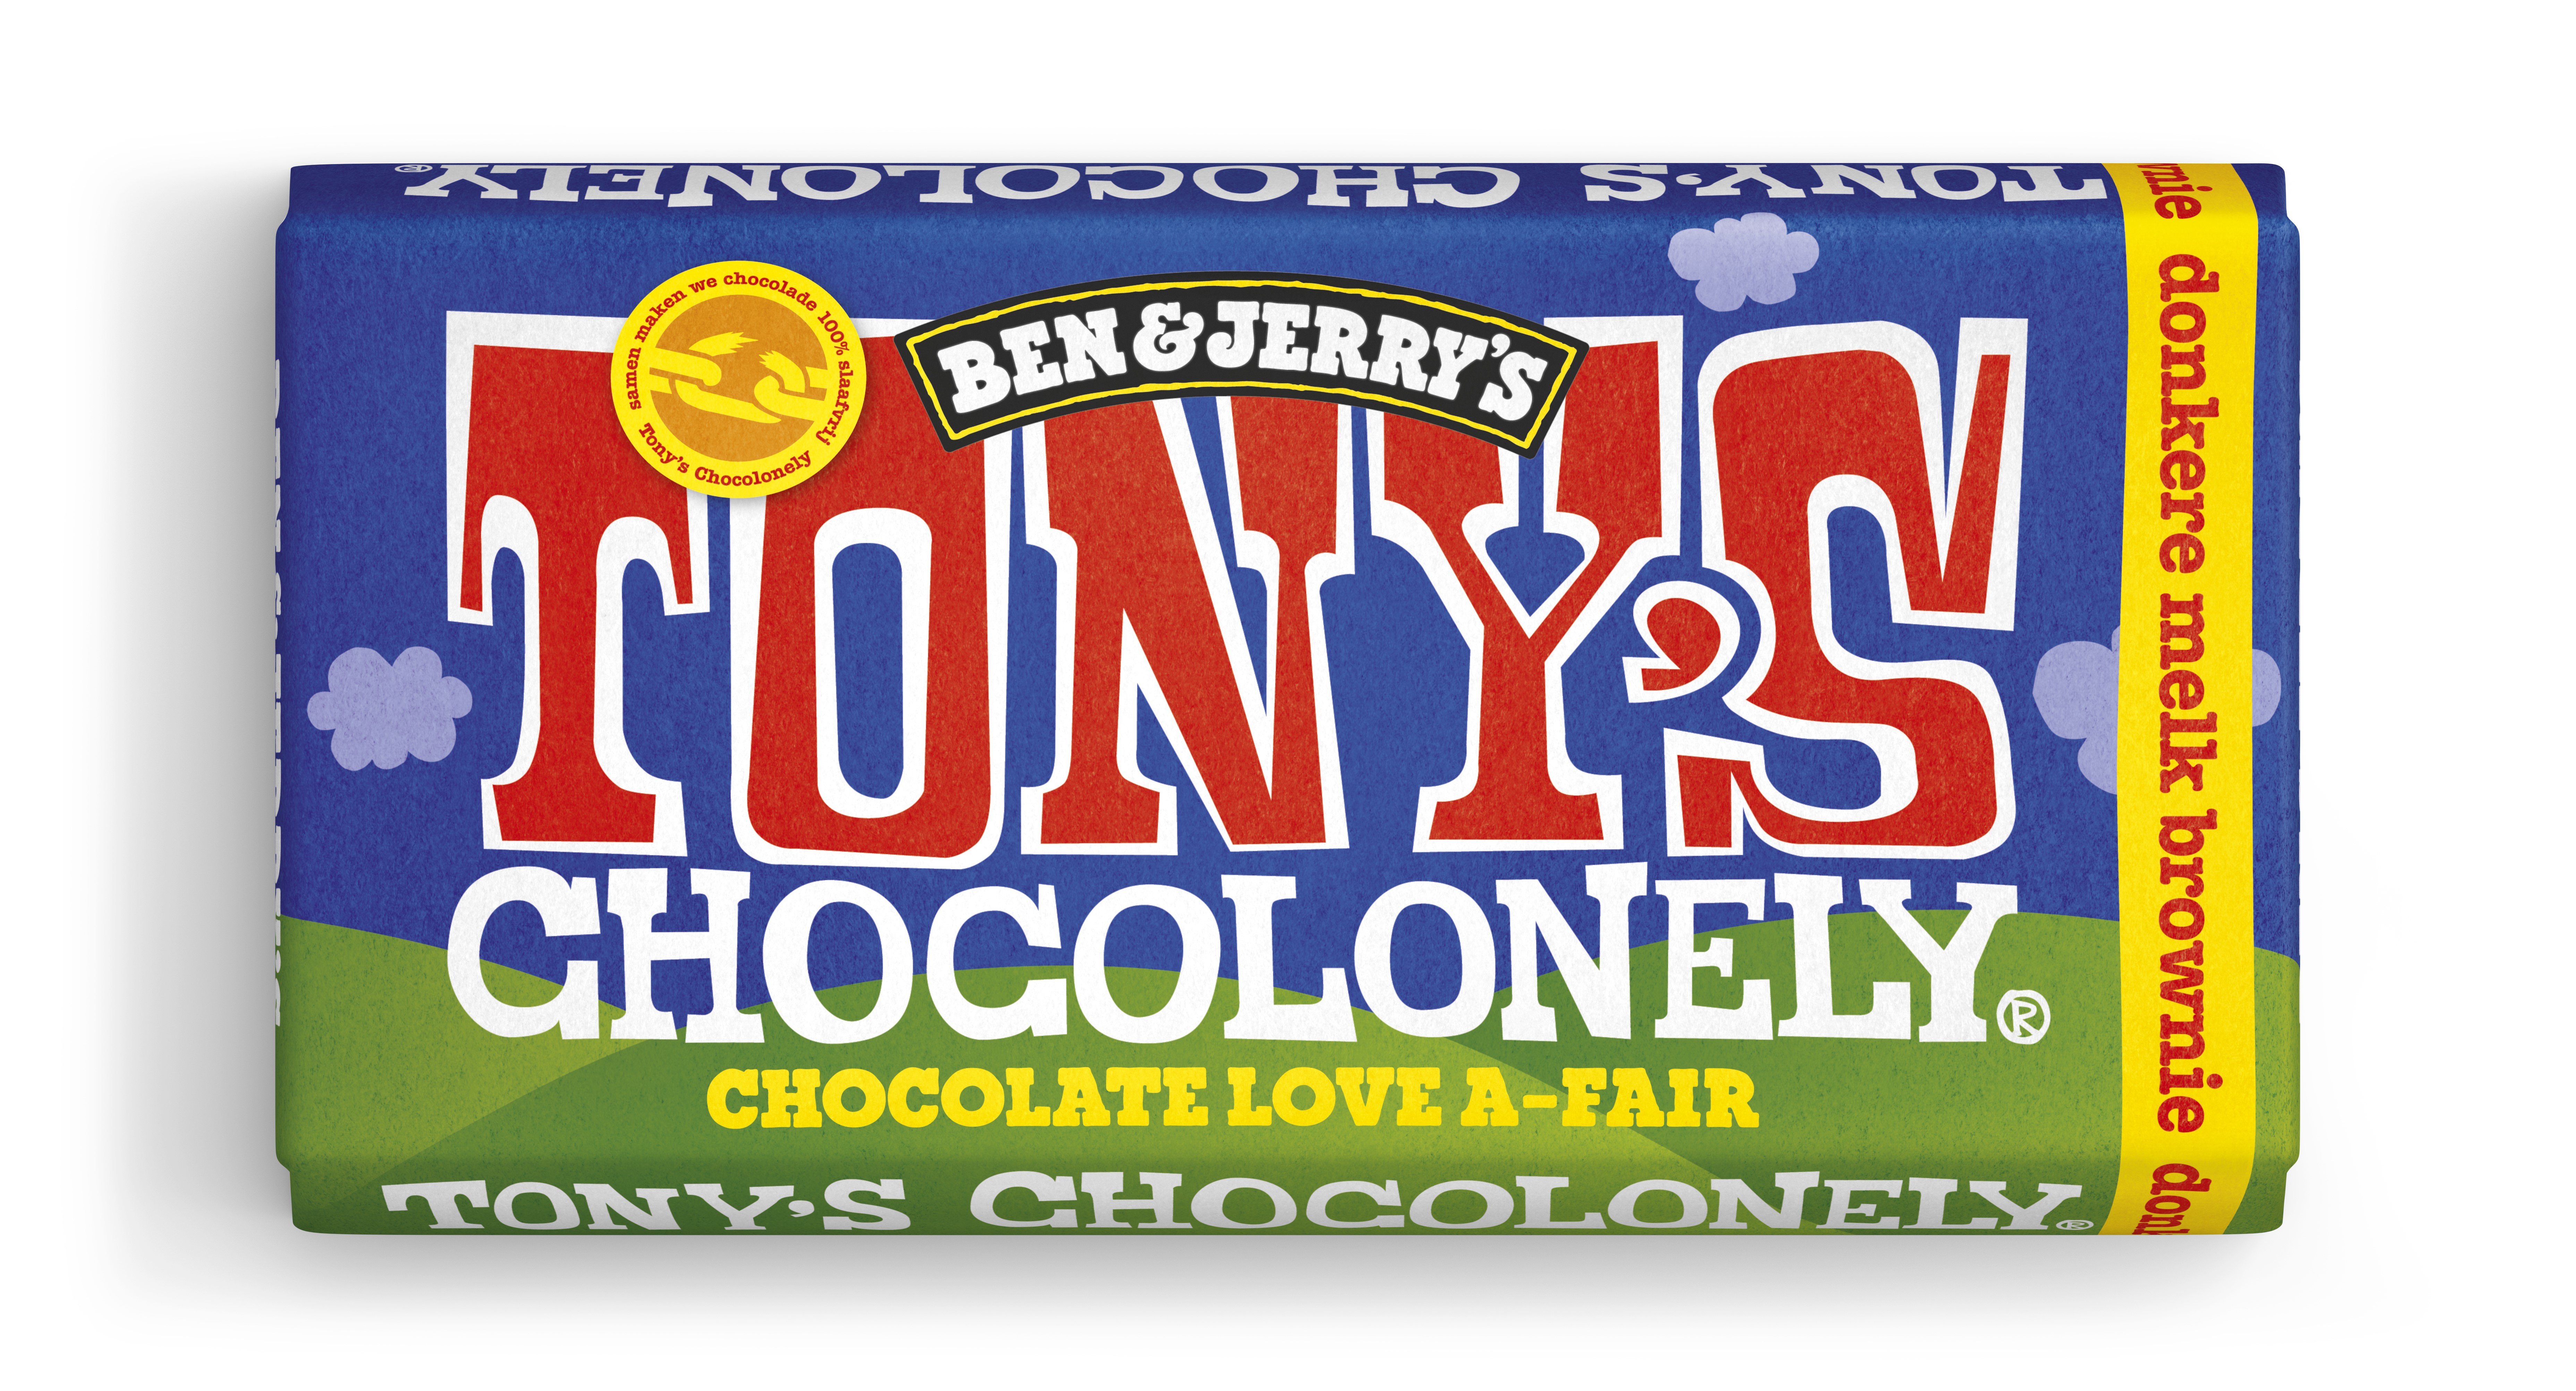  Tony's Chocolonely Donkere Melkchocolade Browniestukjes 180g